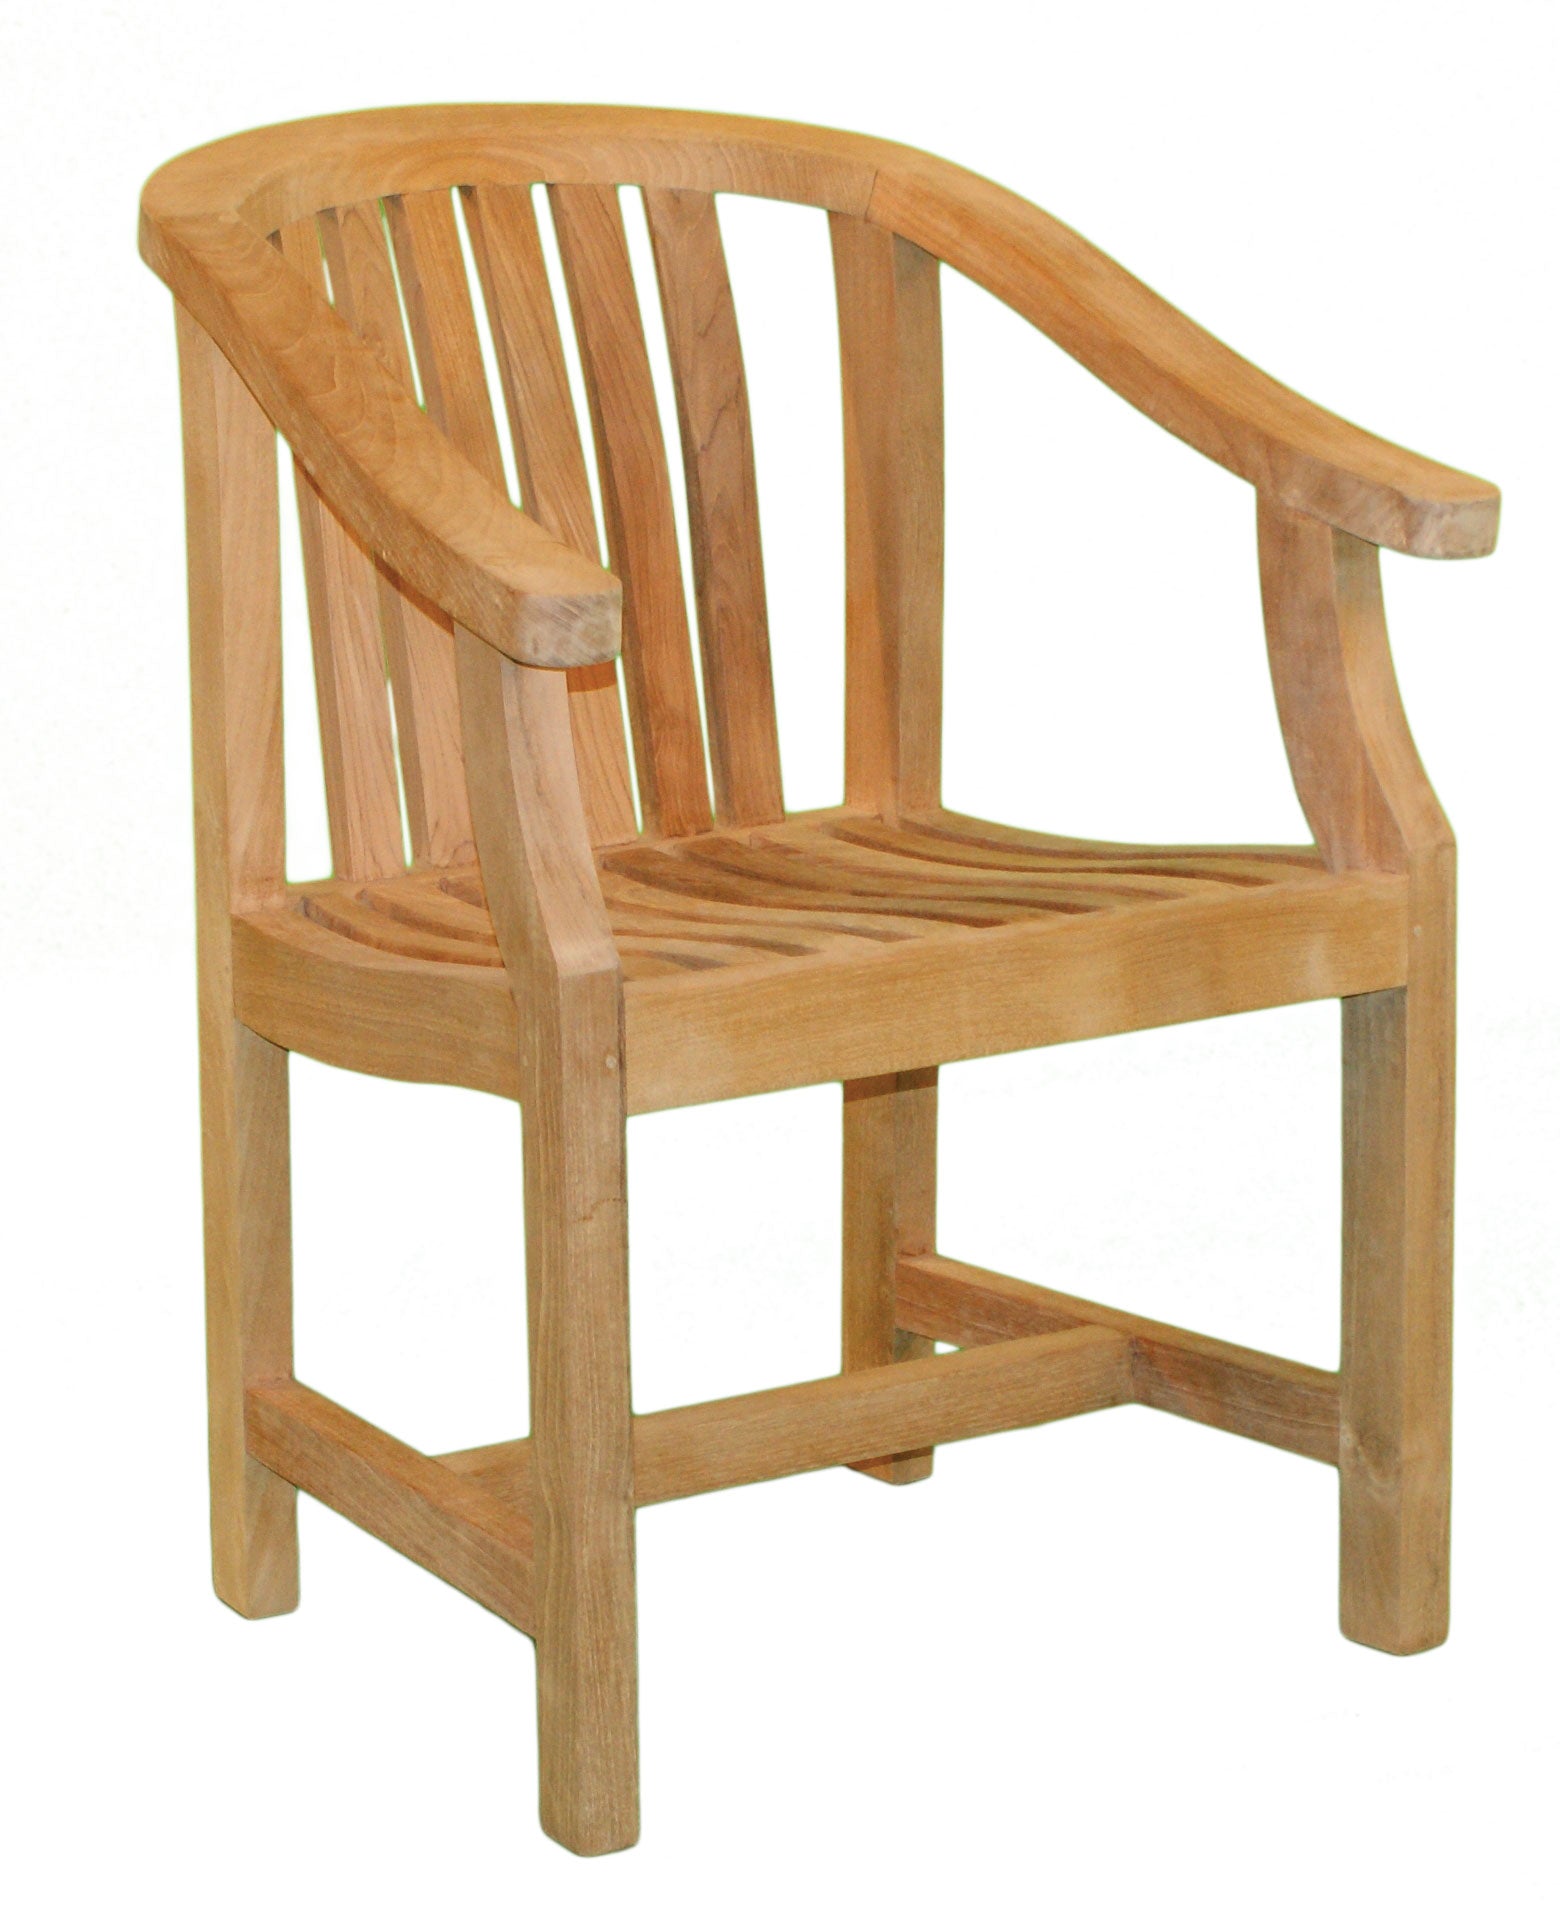 SALE - Winchester Teak Garden Carver Chair